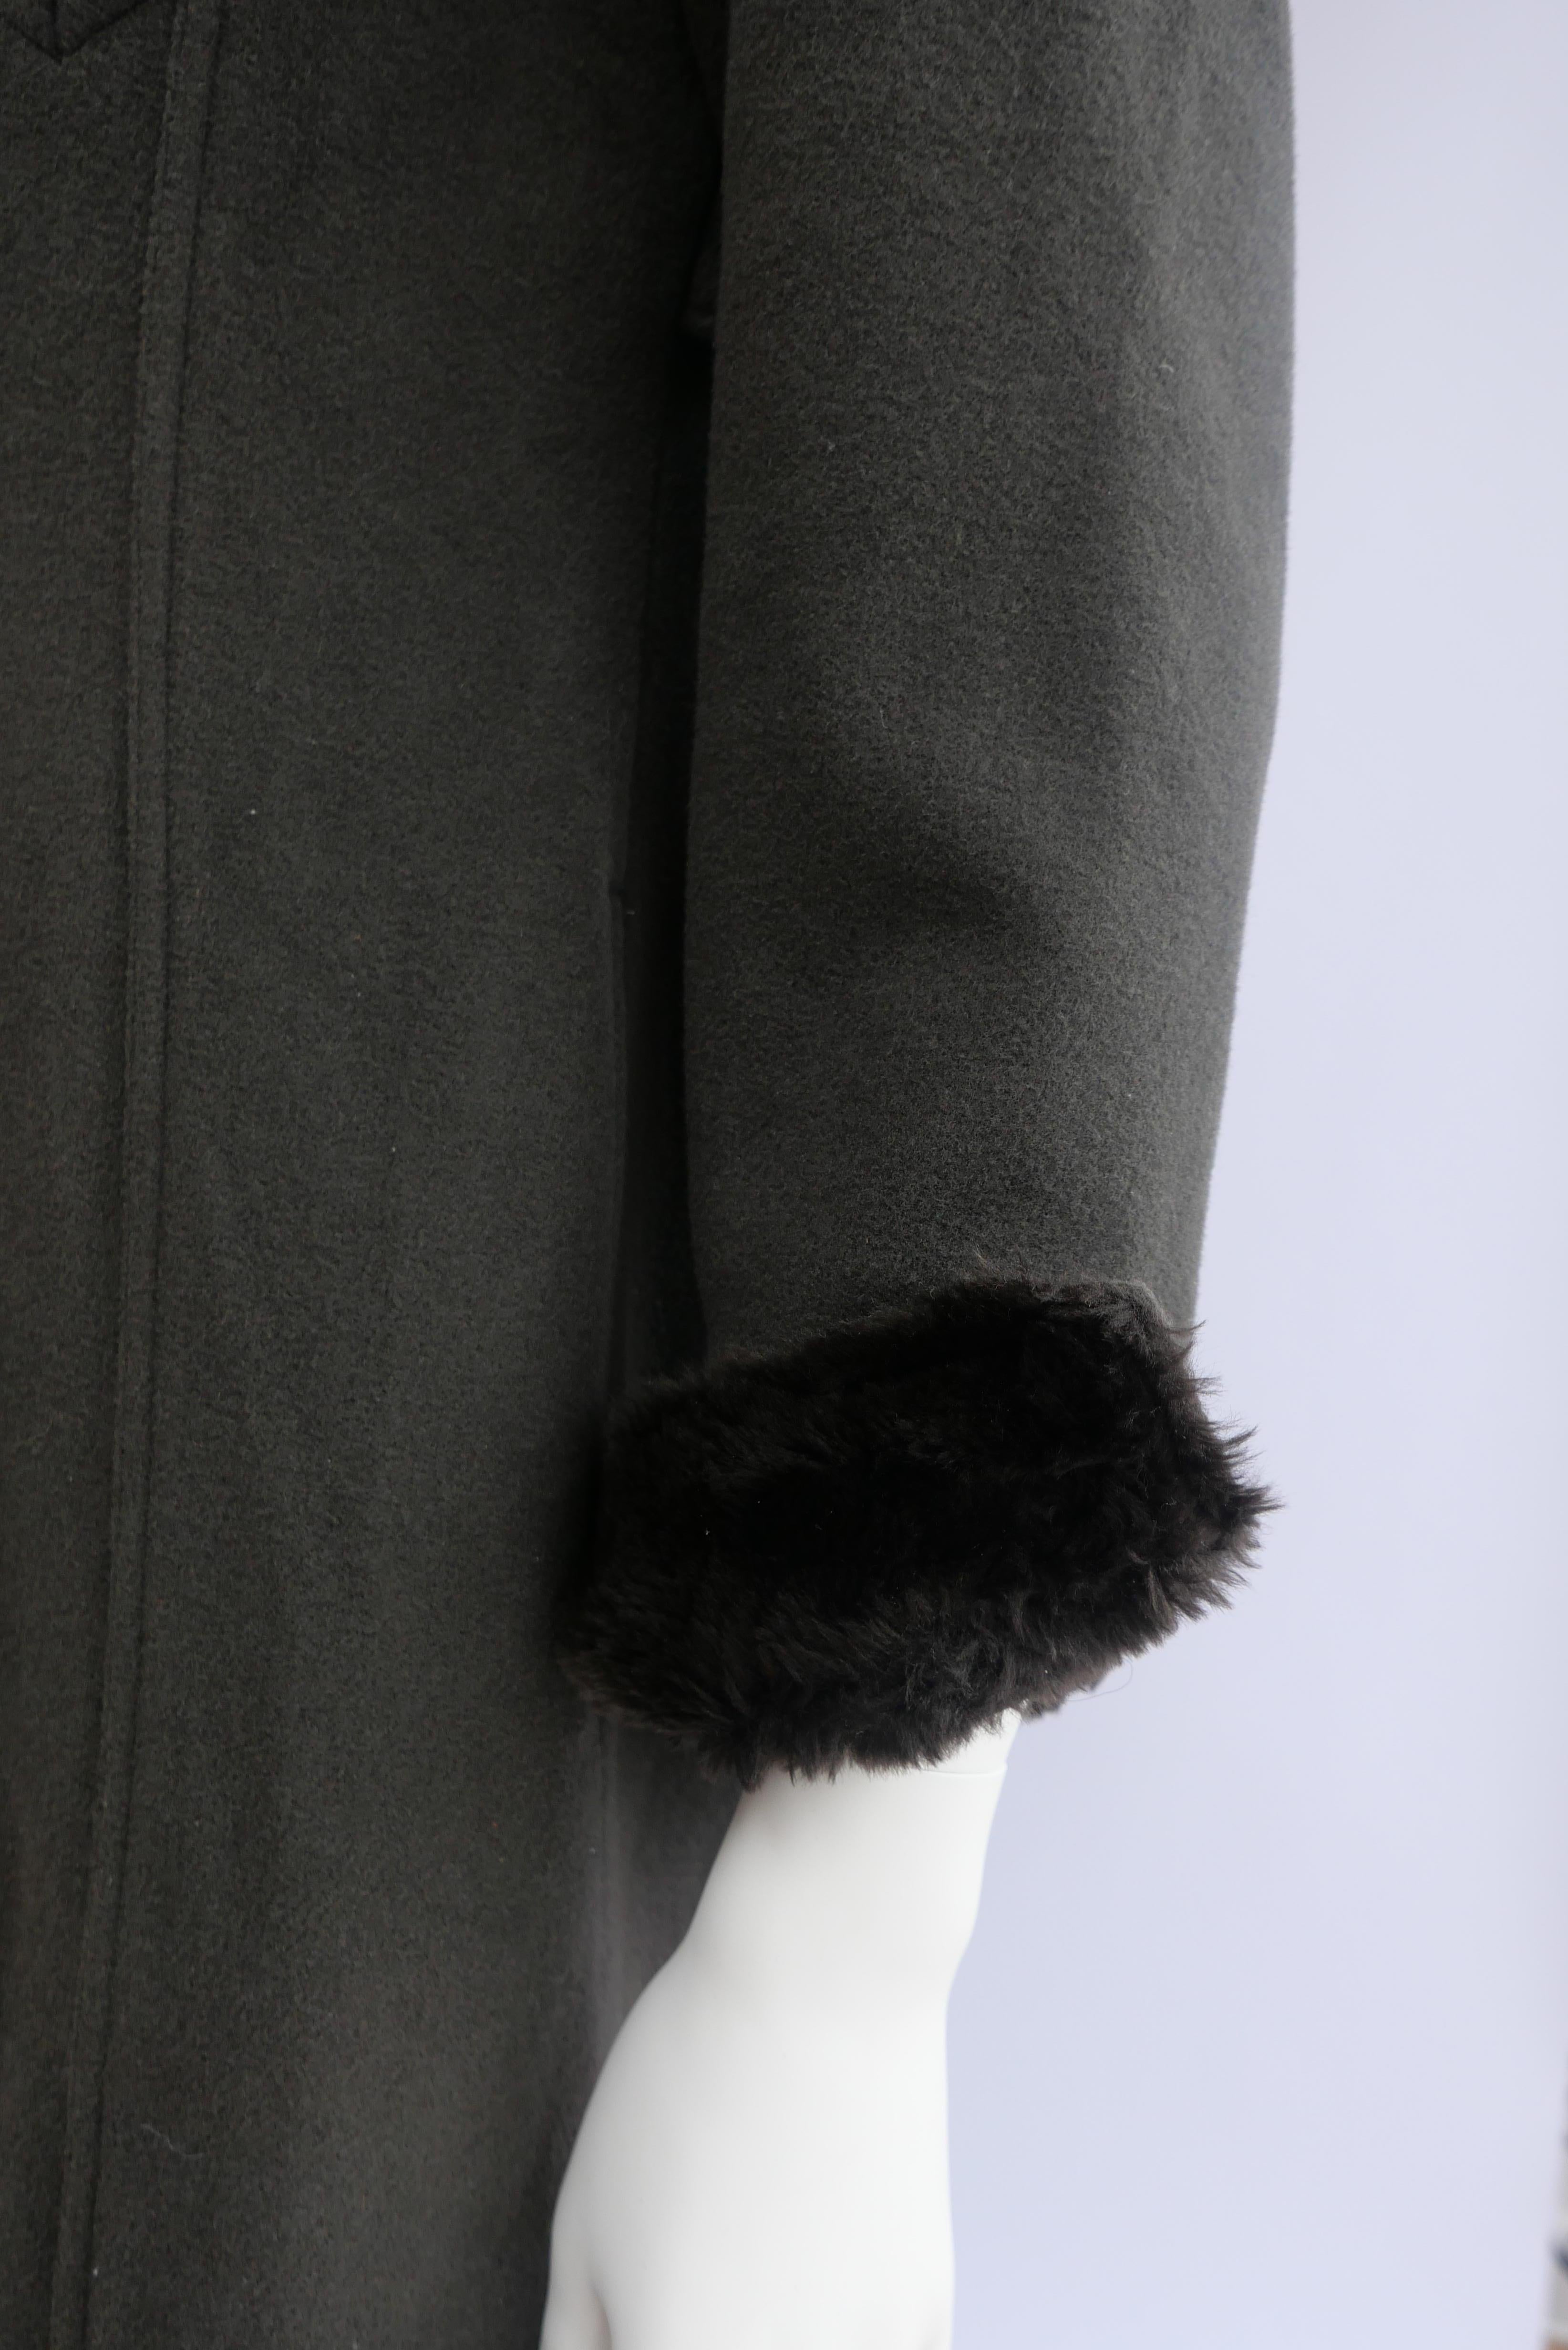 Black Jean Paul Gaultier Jeans Long Khaki Coat With Fur Collar  For Sale